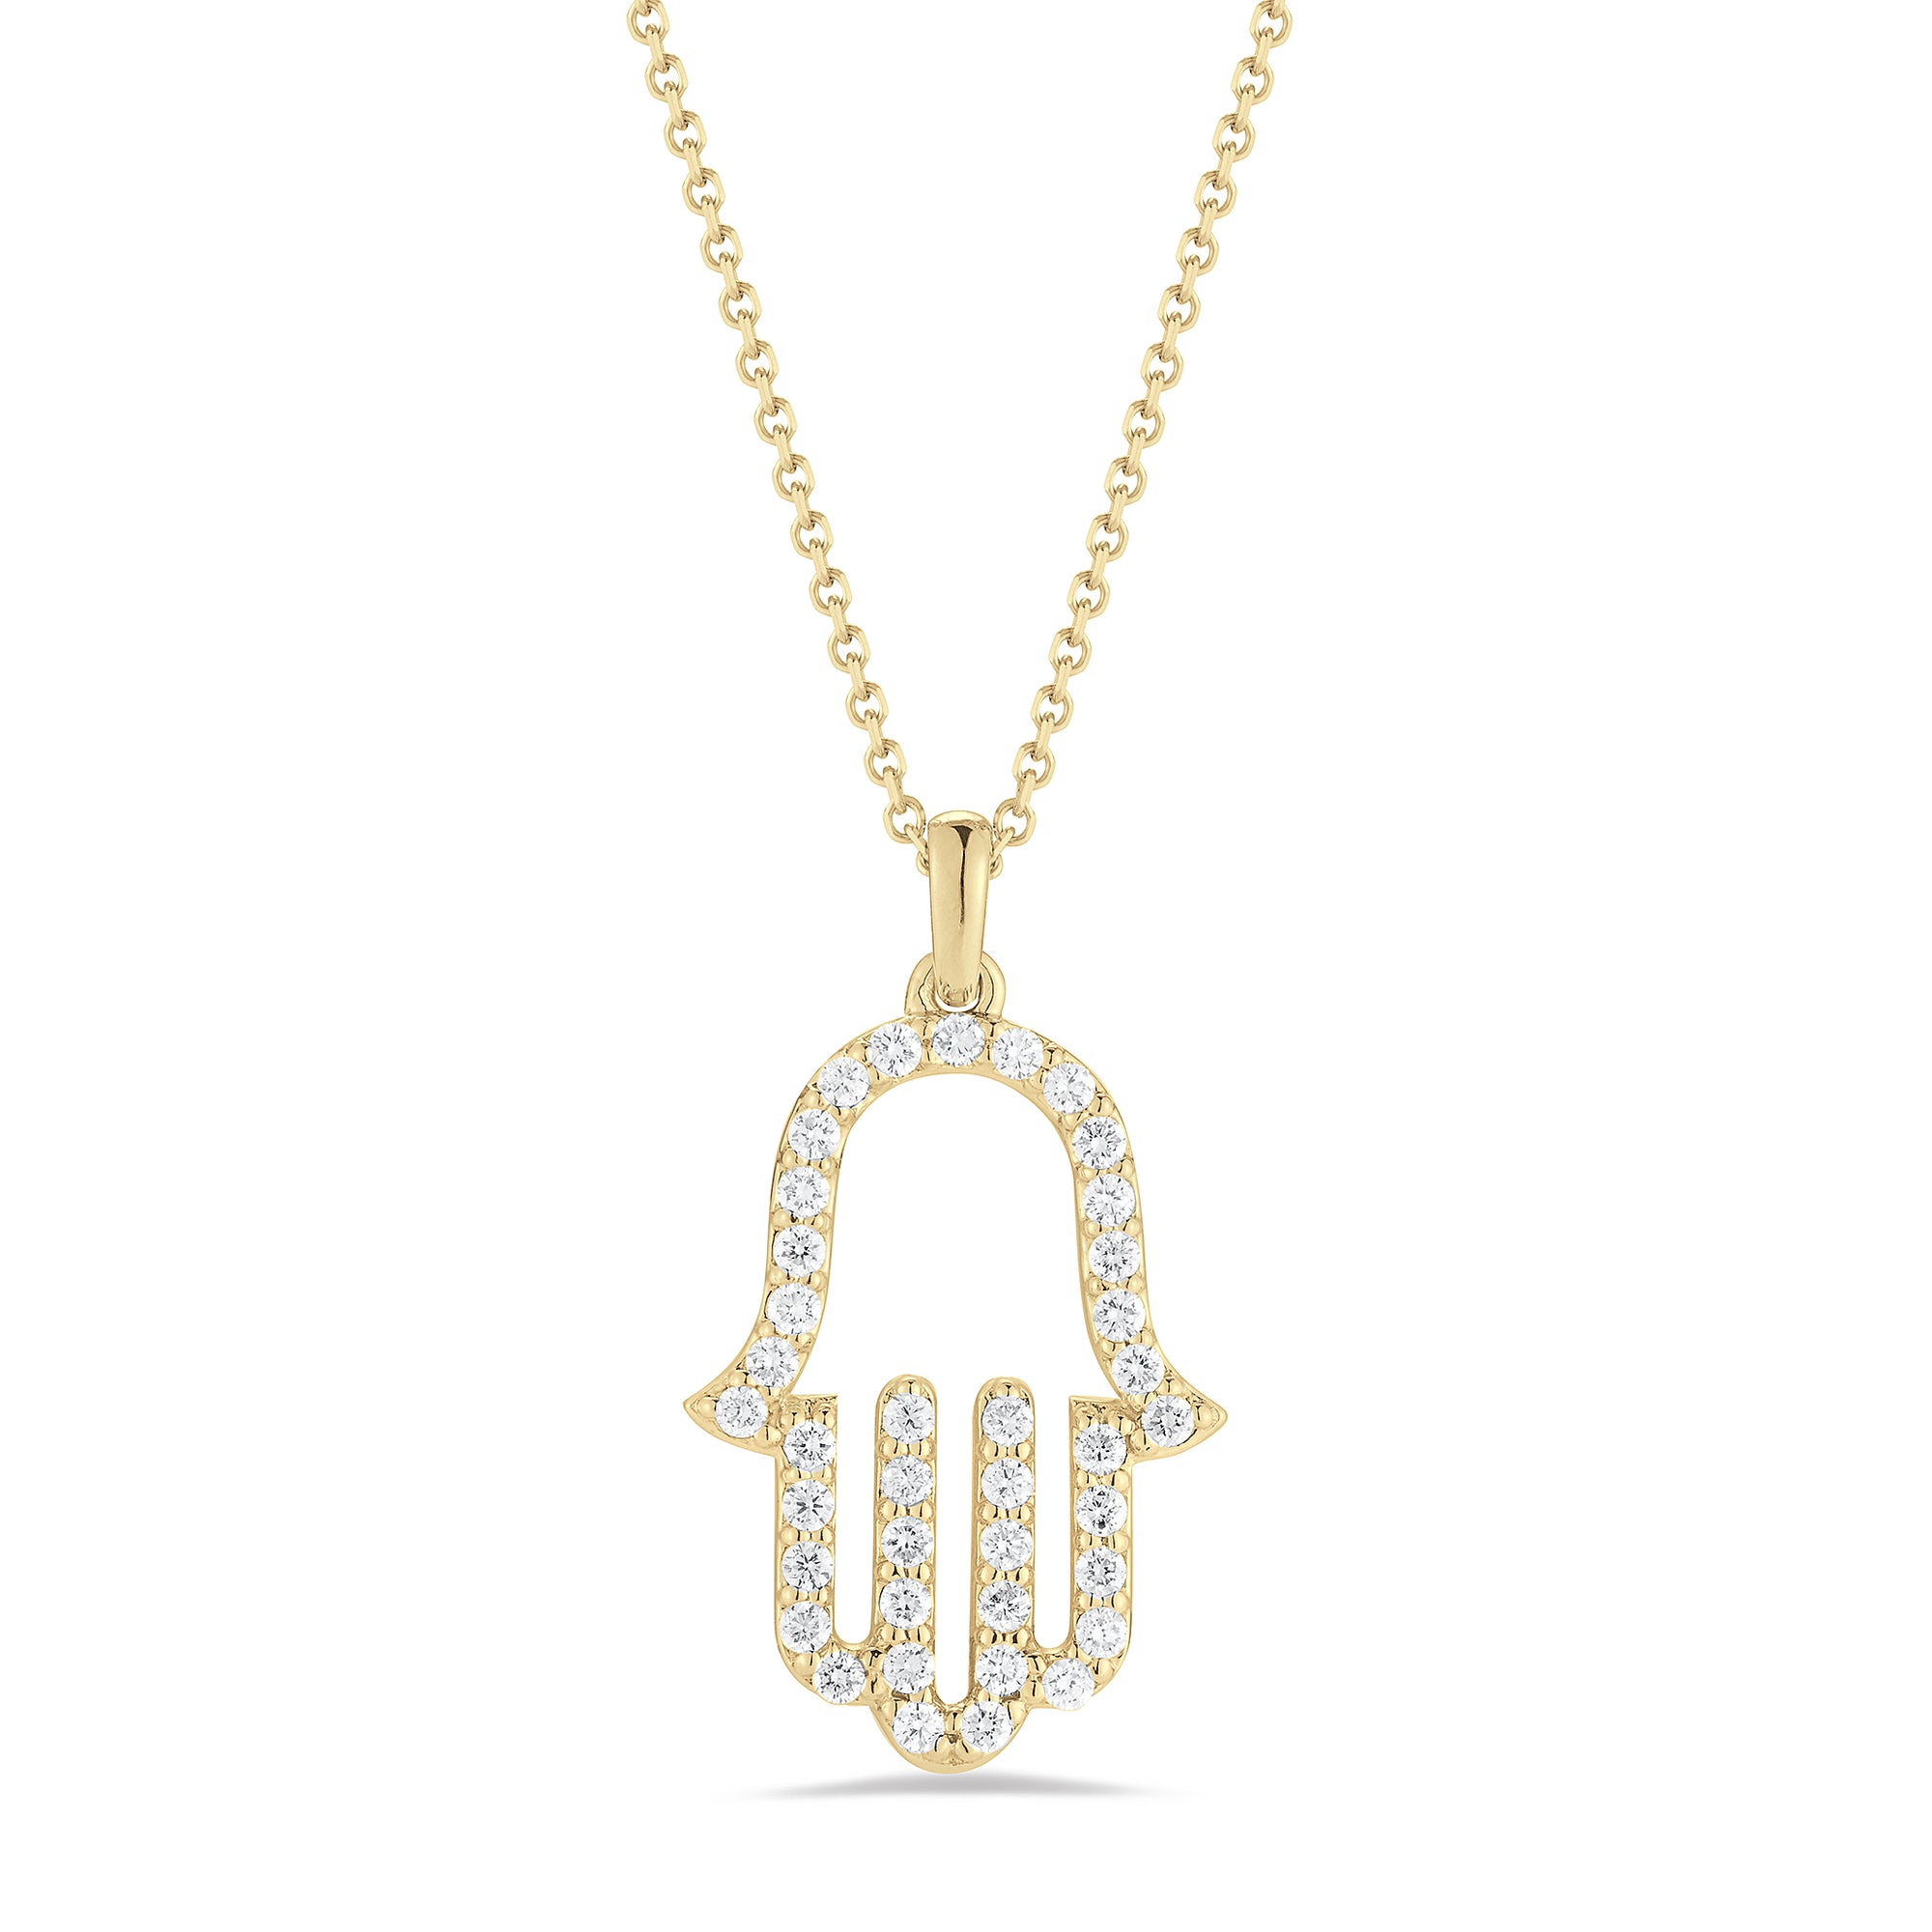 Diamond Hamsa Pendant Necklace     -14K gold weighing 3.5 grams  -39 round shared prong-set diamonds totaling 0.40 carats